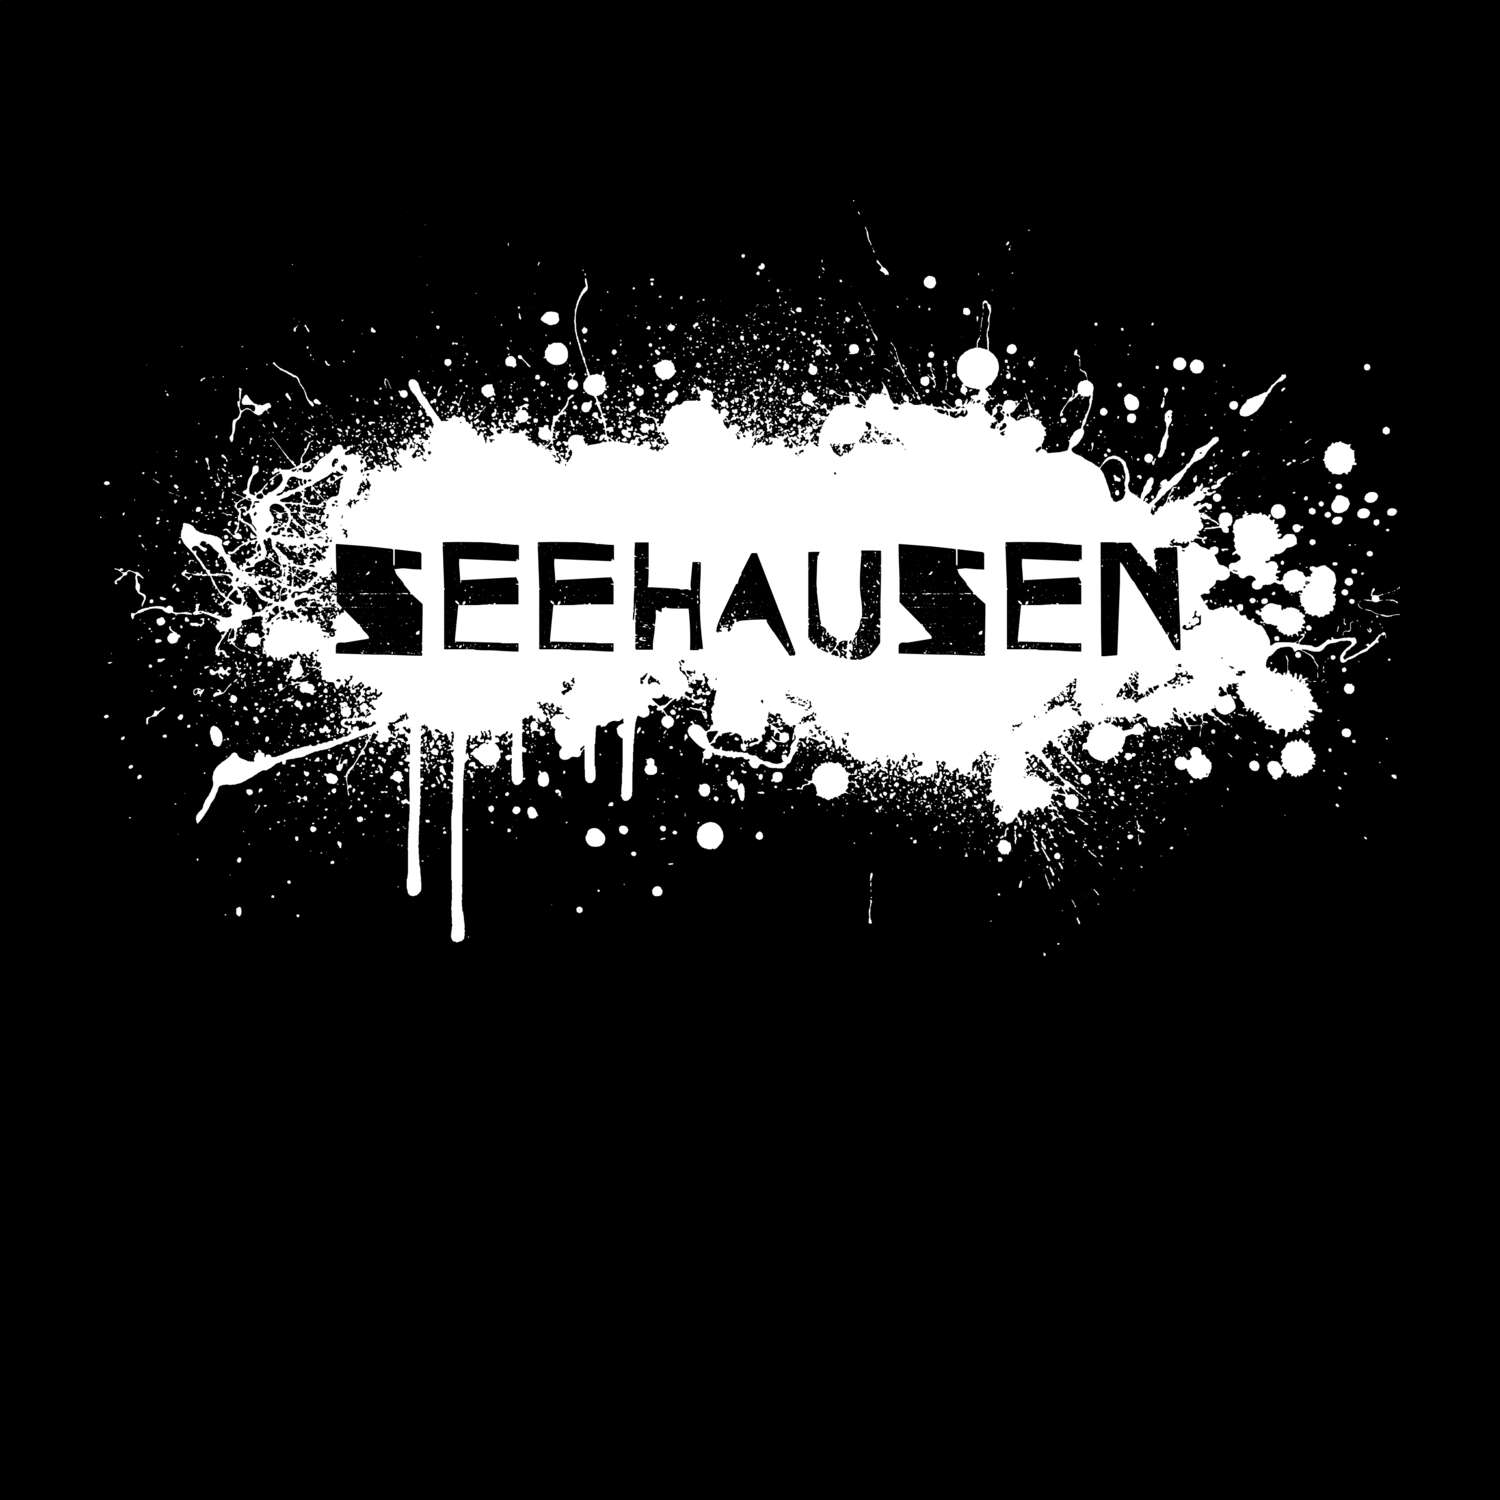 Seehausen T-Shirt »Paint Splash Punk«